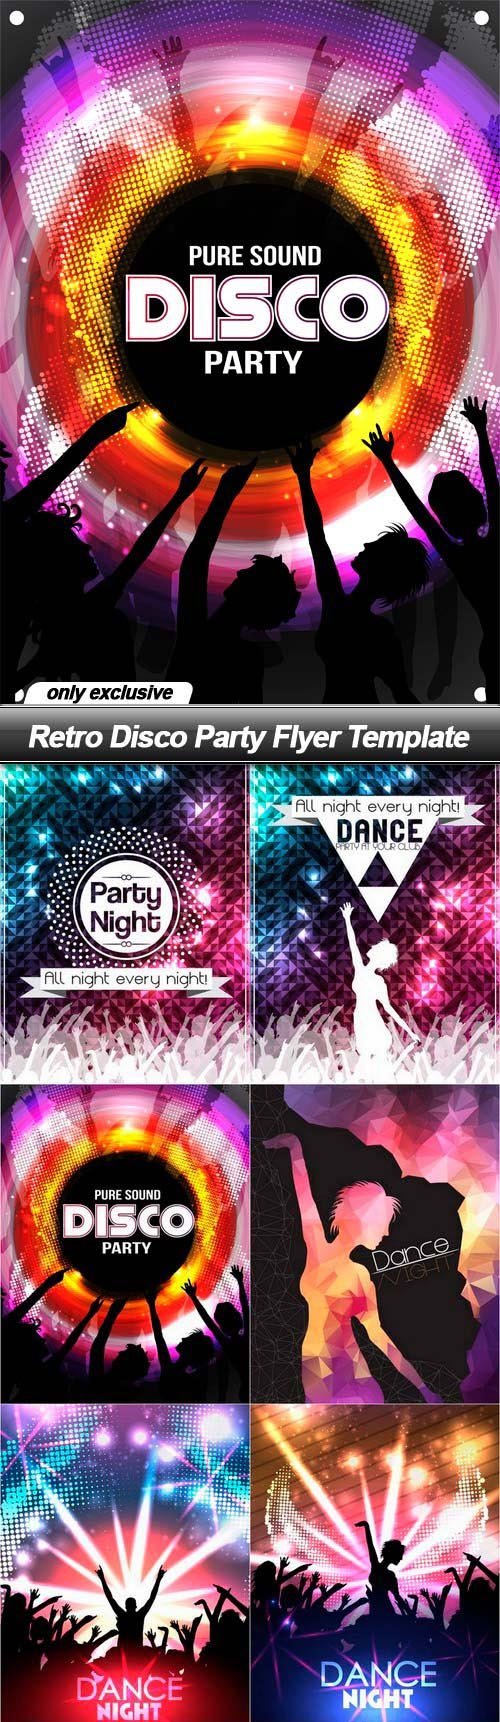 Retro Disco Party Flyer Template - 10 EPS